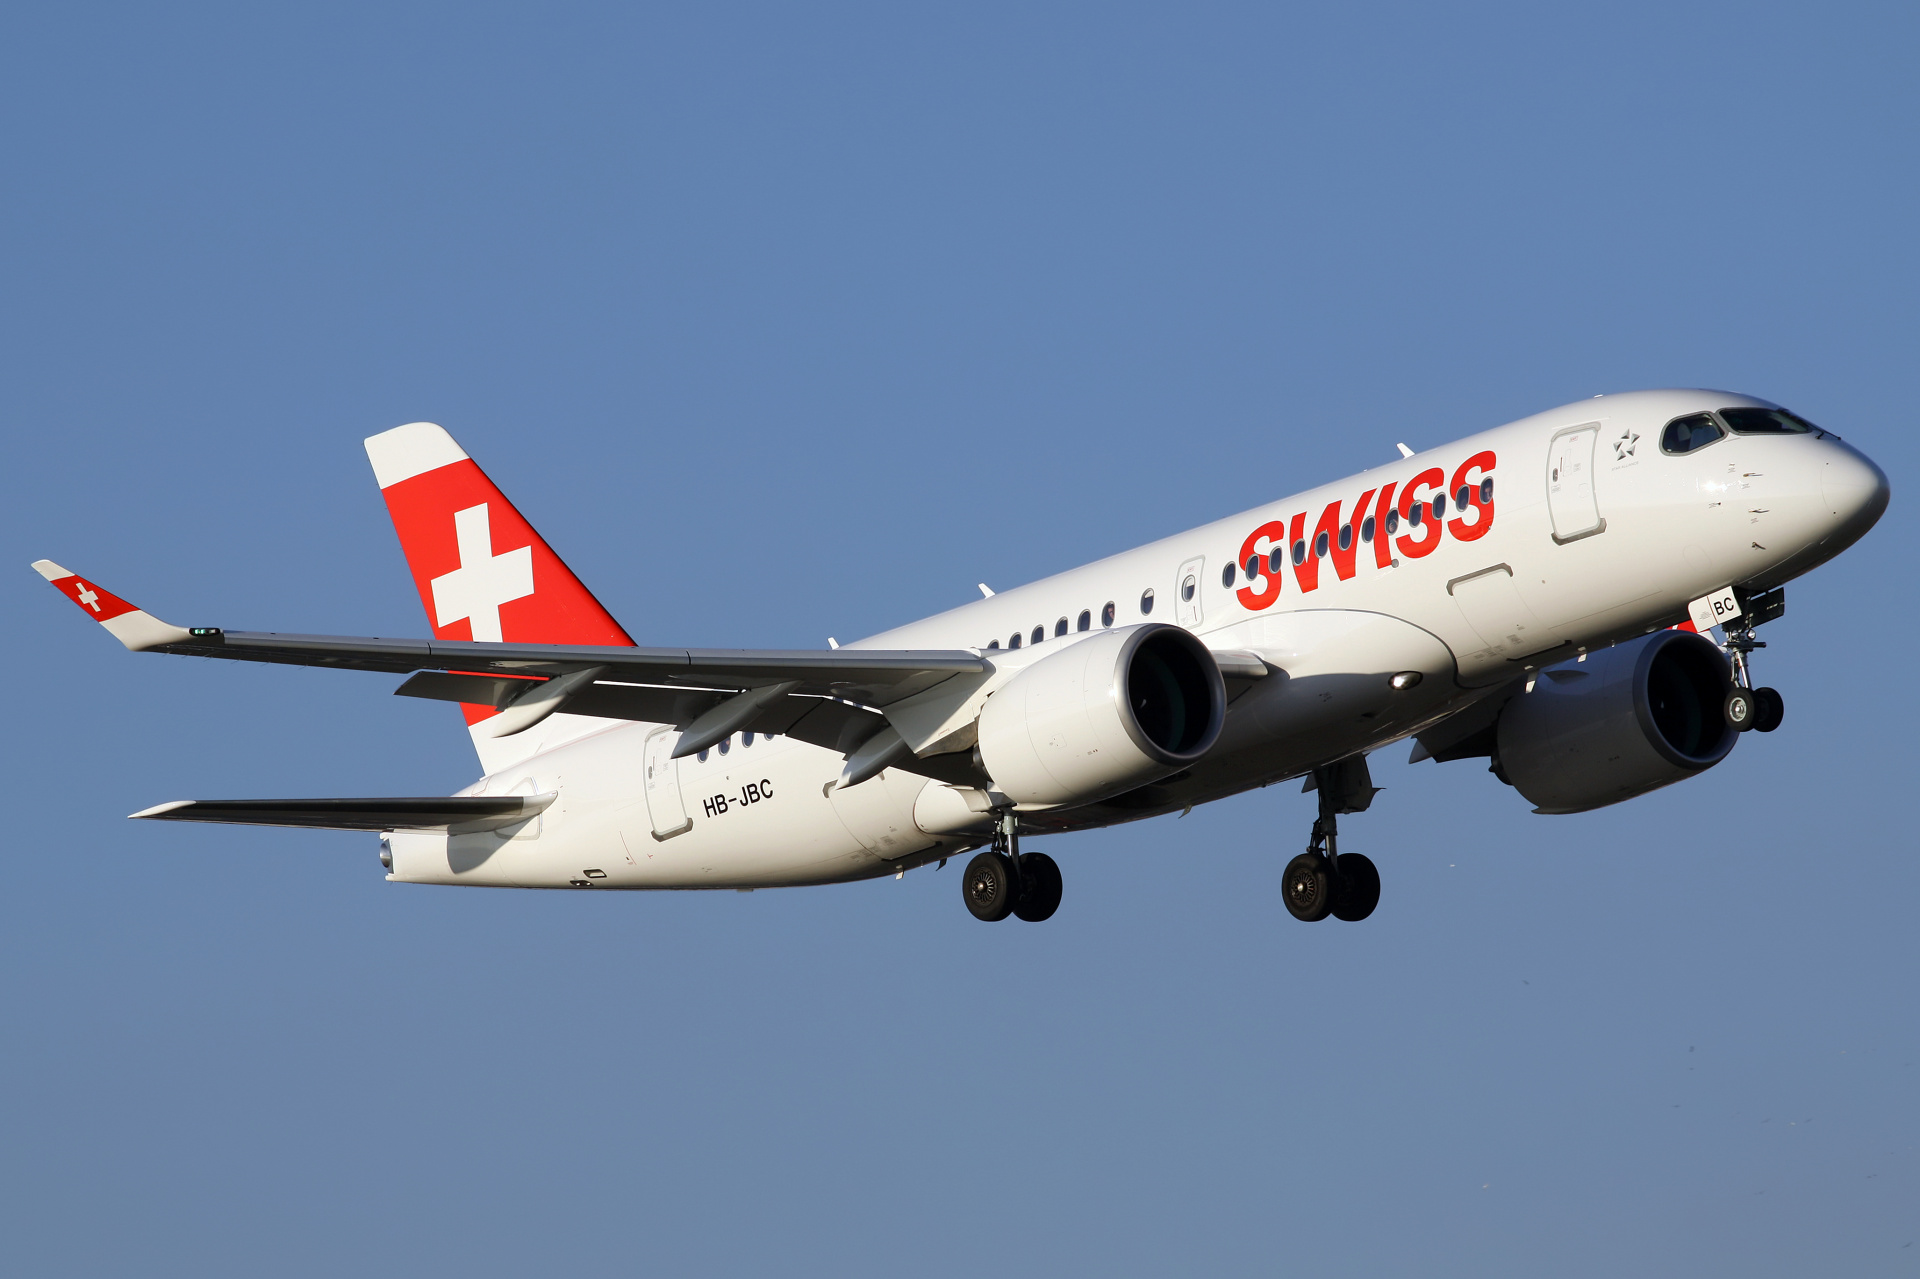 HB-JBC (Aircraft » EPWA Spotting » Airbus A220-100 » Swiss International Air Lines)